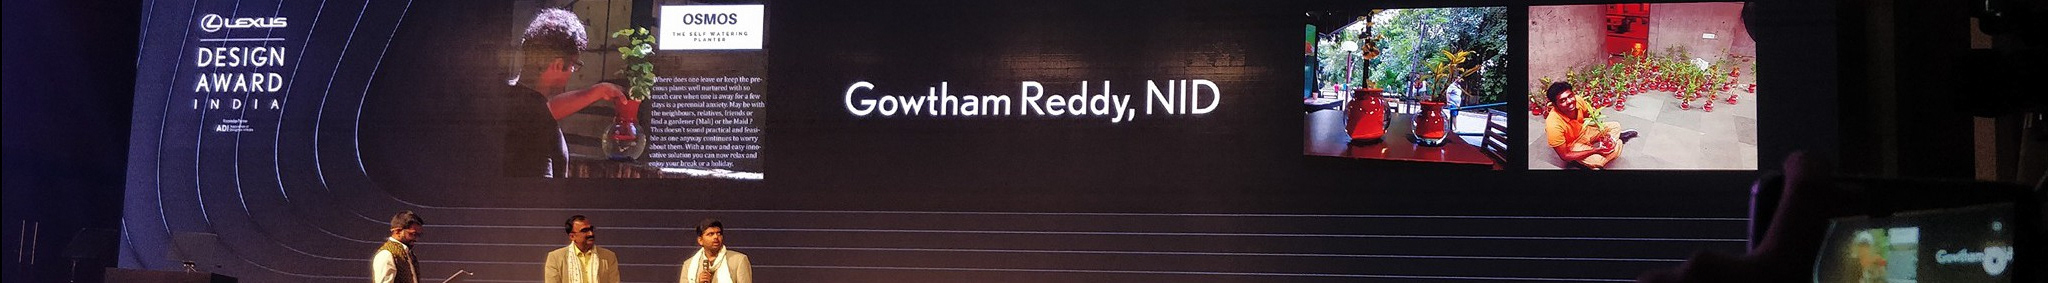 Gowtham Reddy profil başlığı